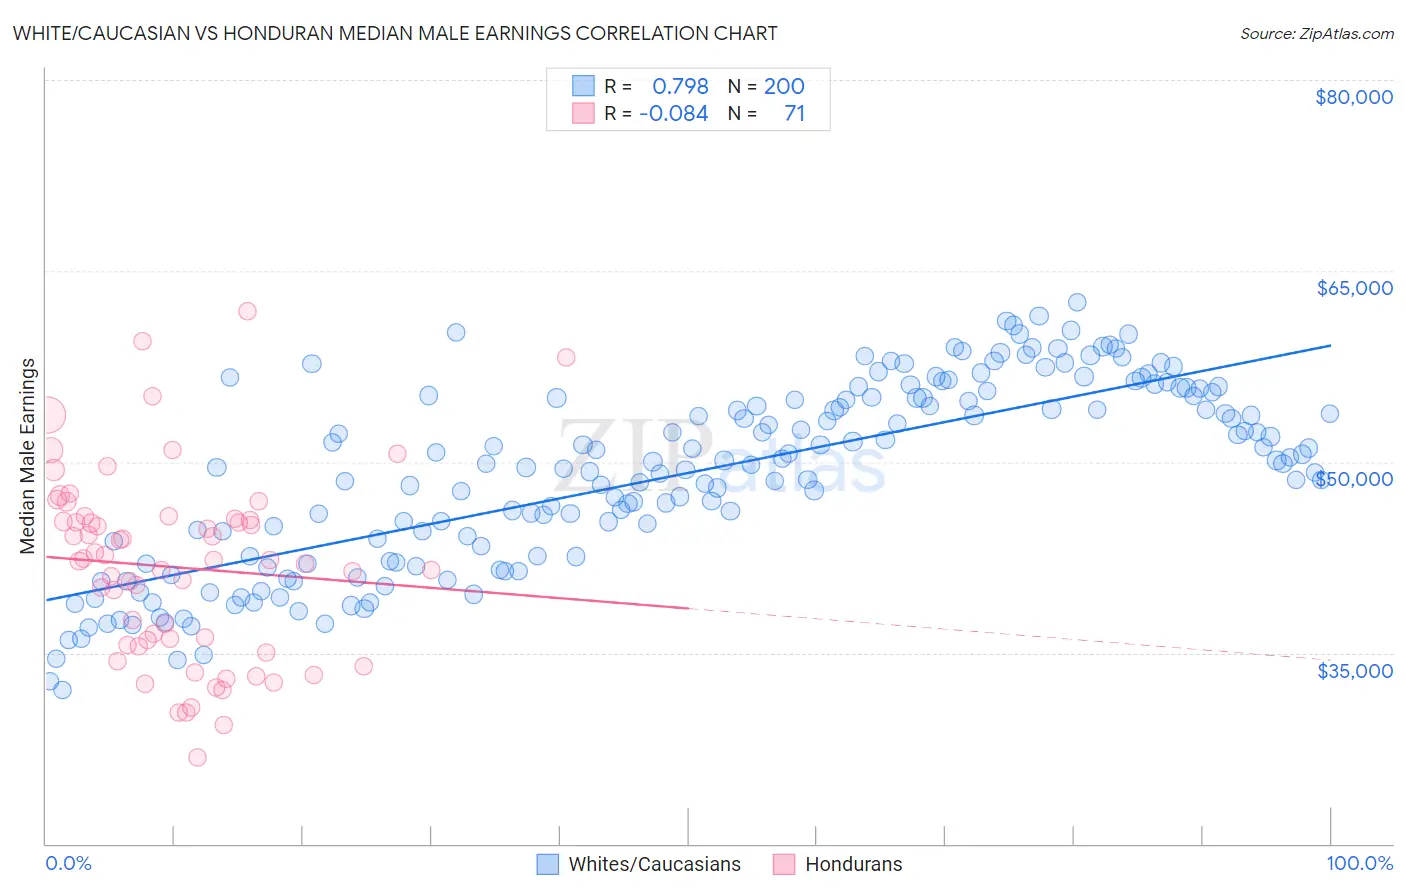 White/Caucasian vs Honduran Median Male Earnings